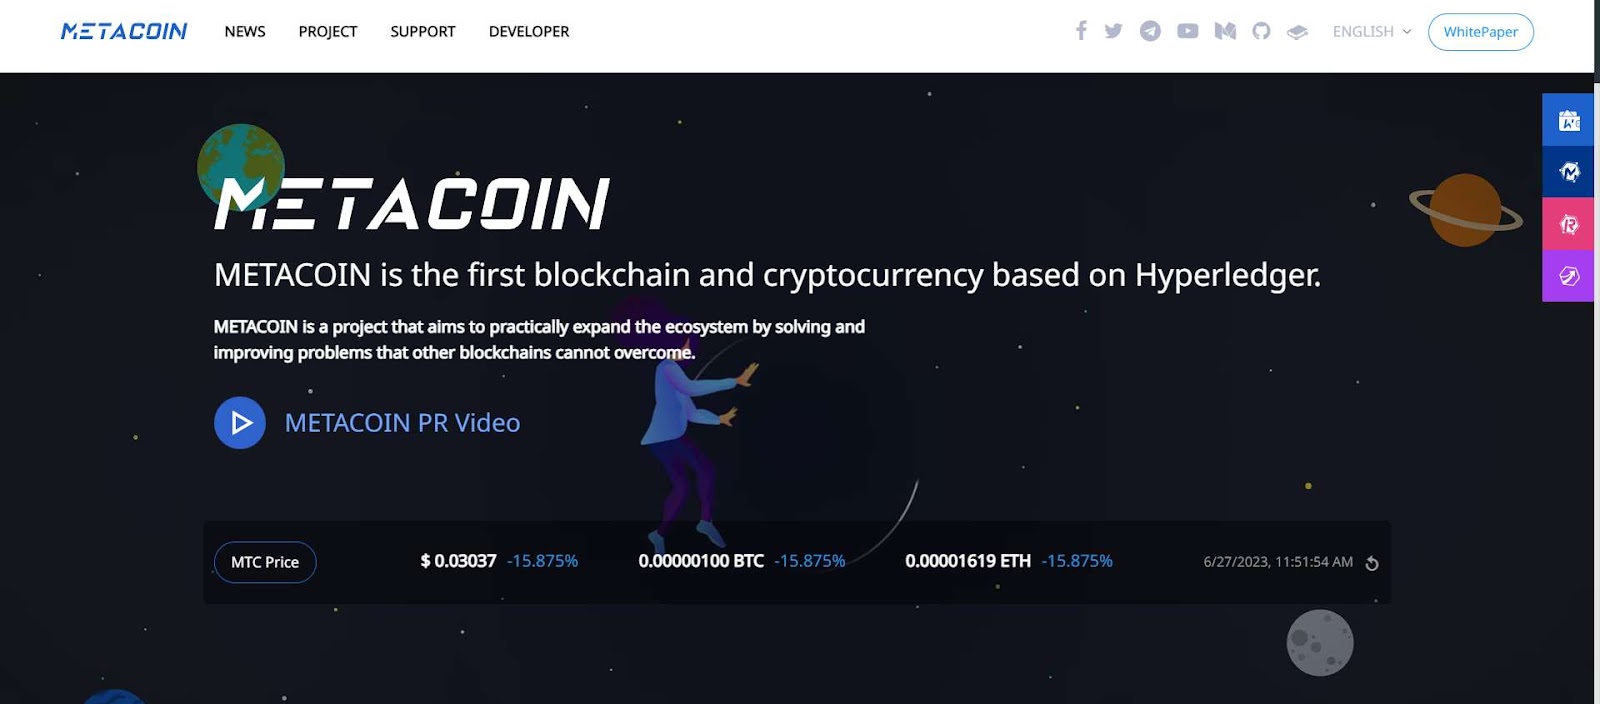 Meta coin webpage